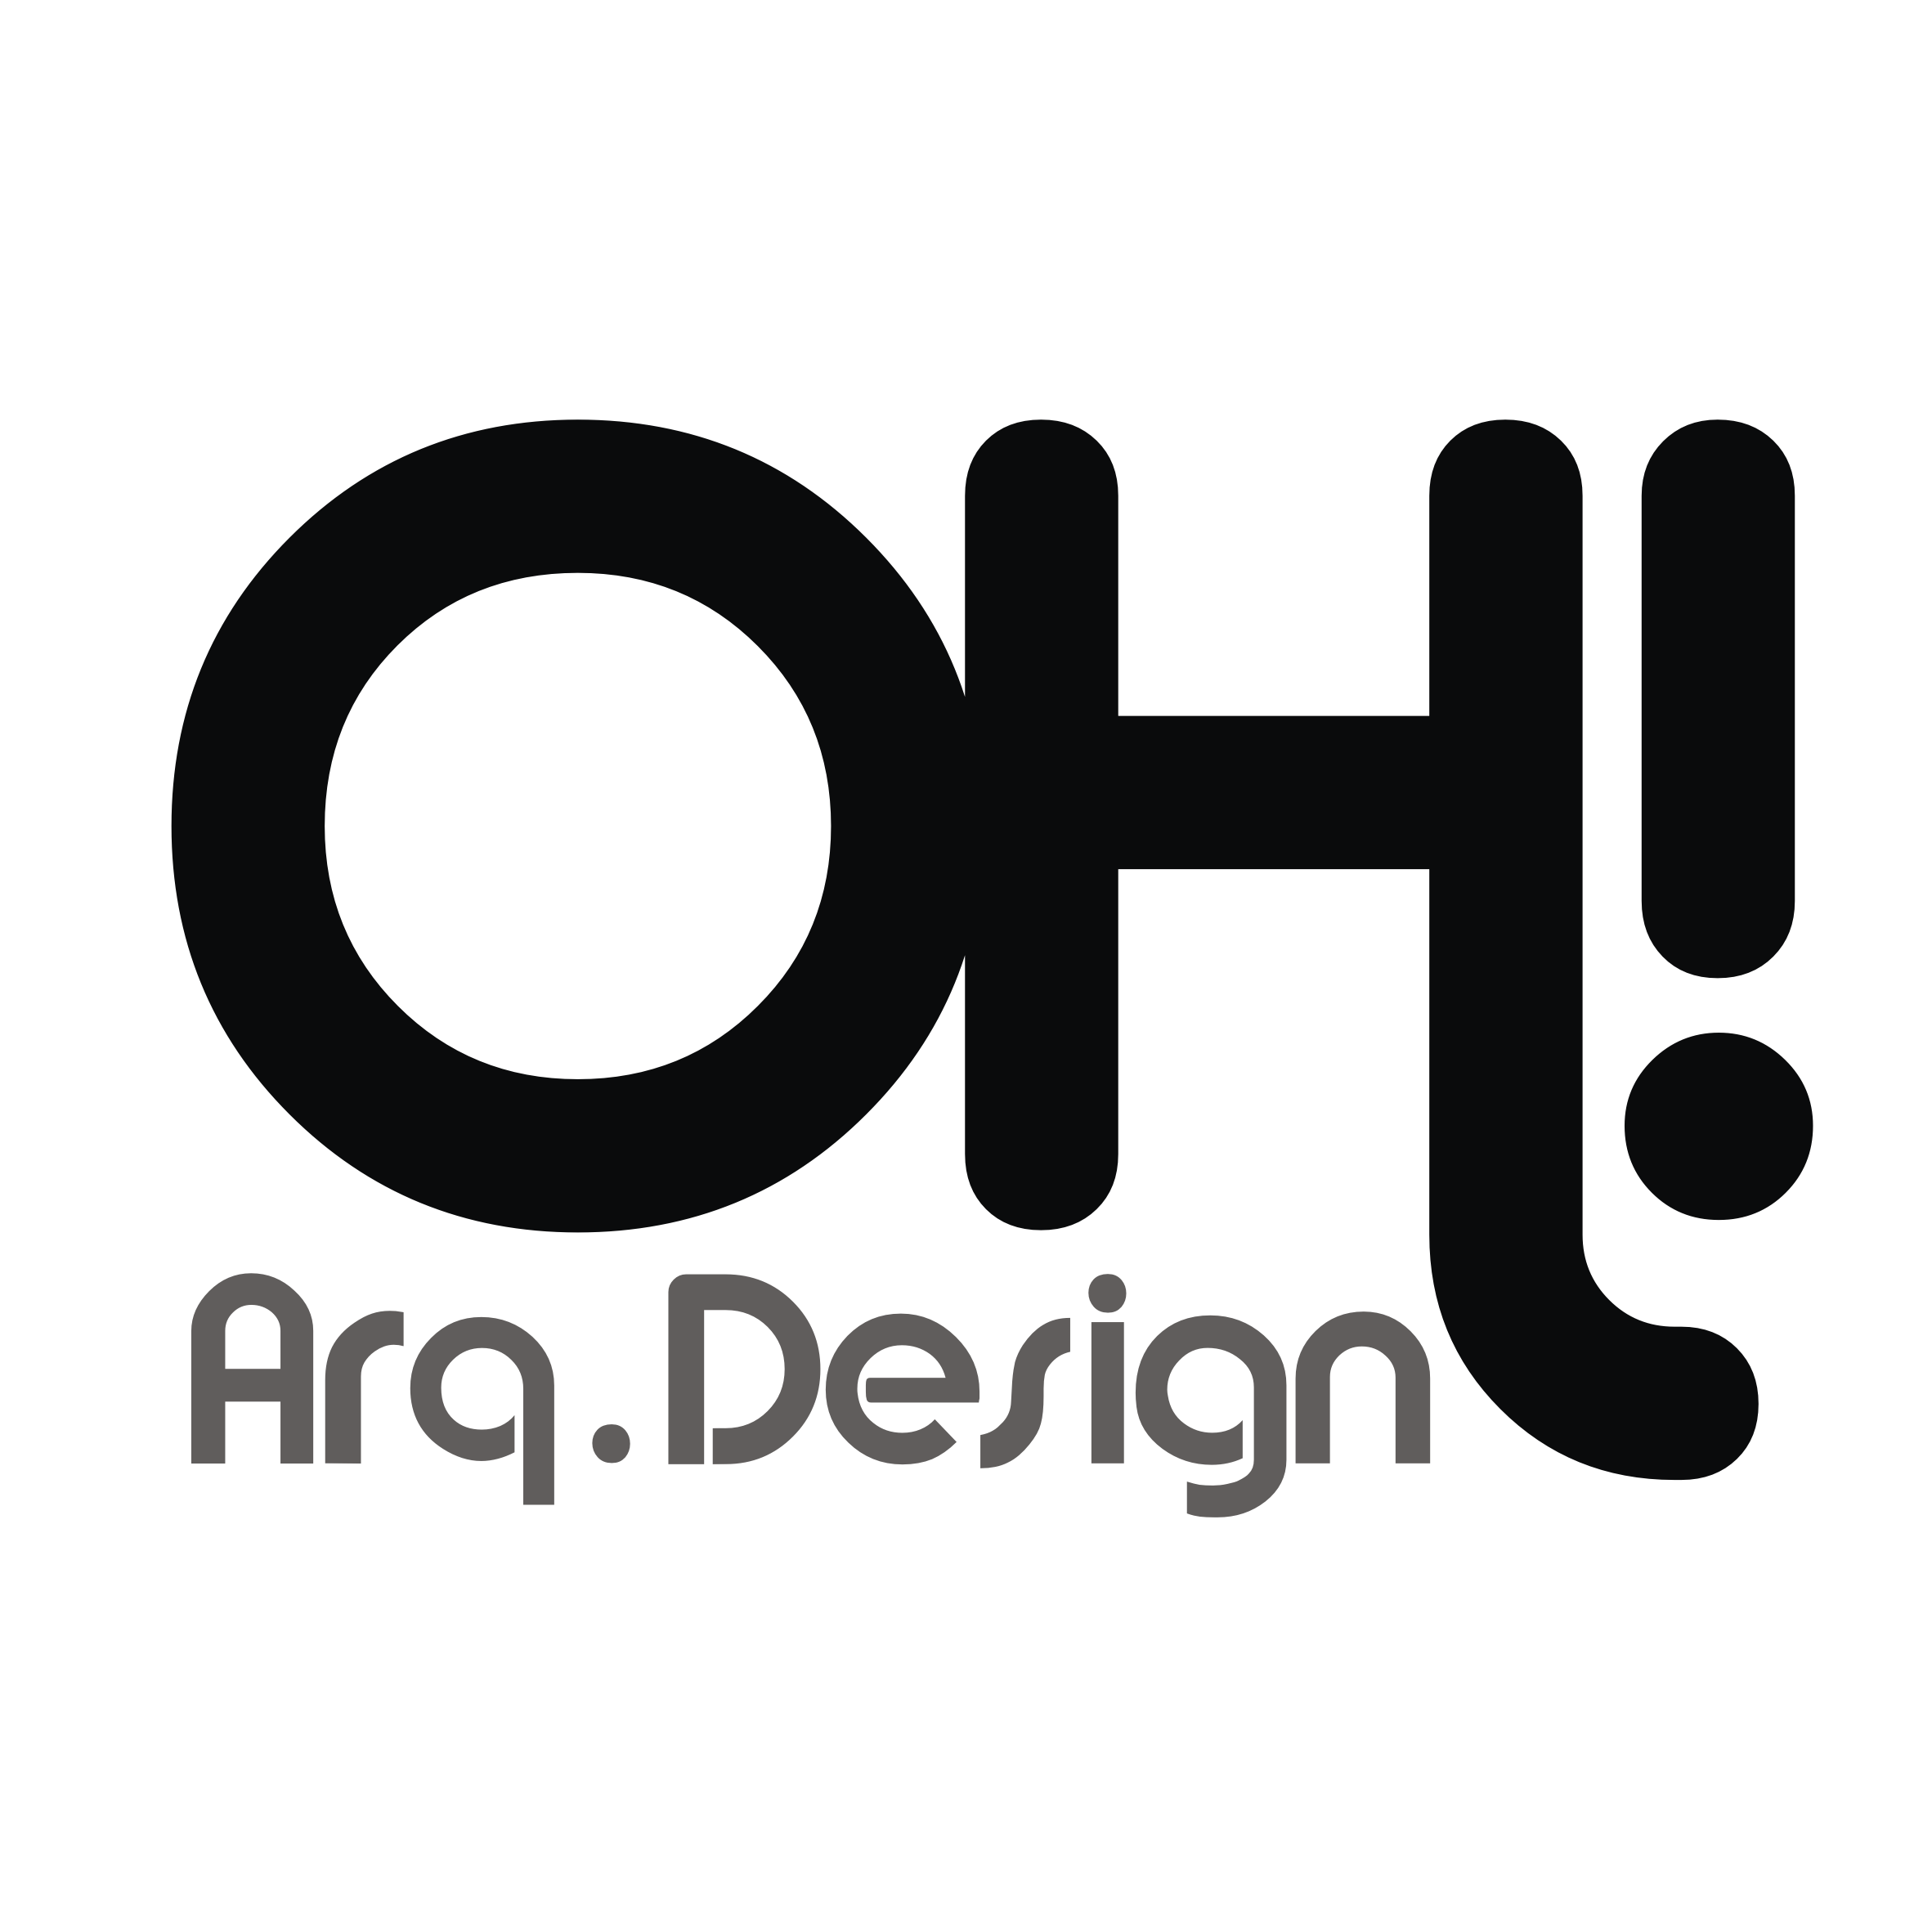 Oh!Arq.Design